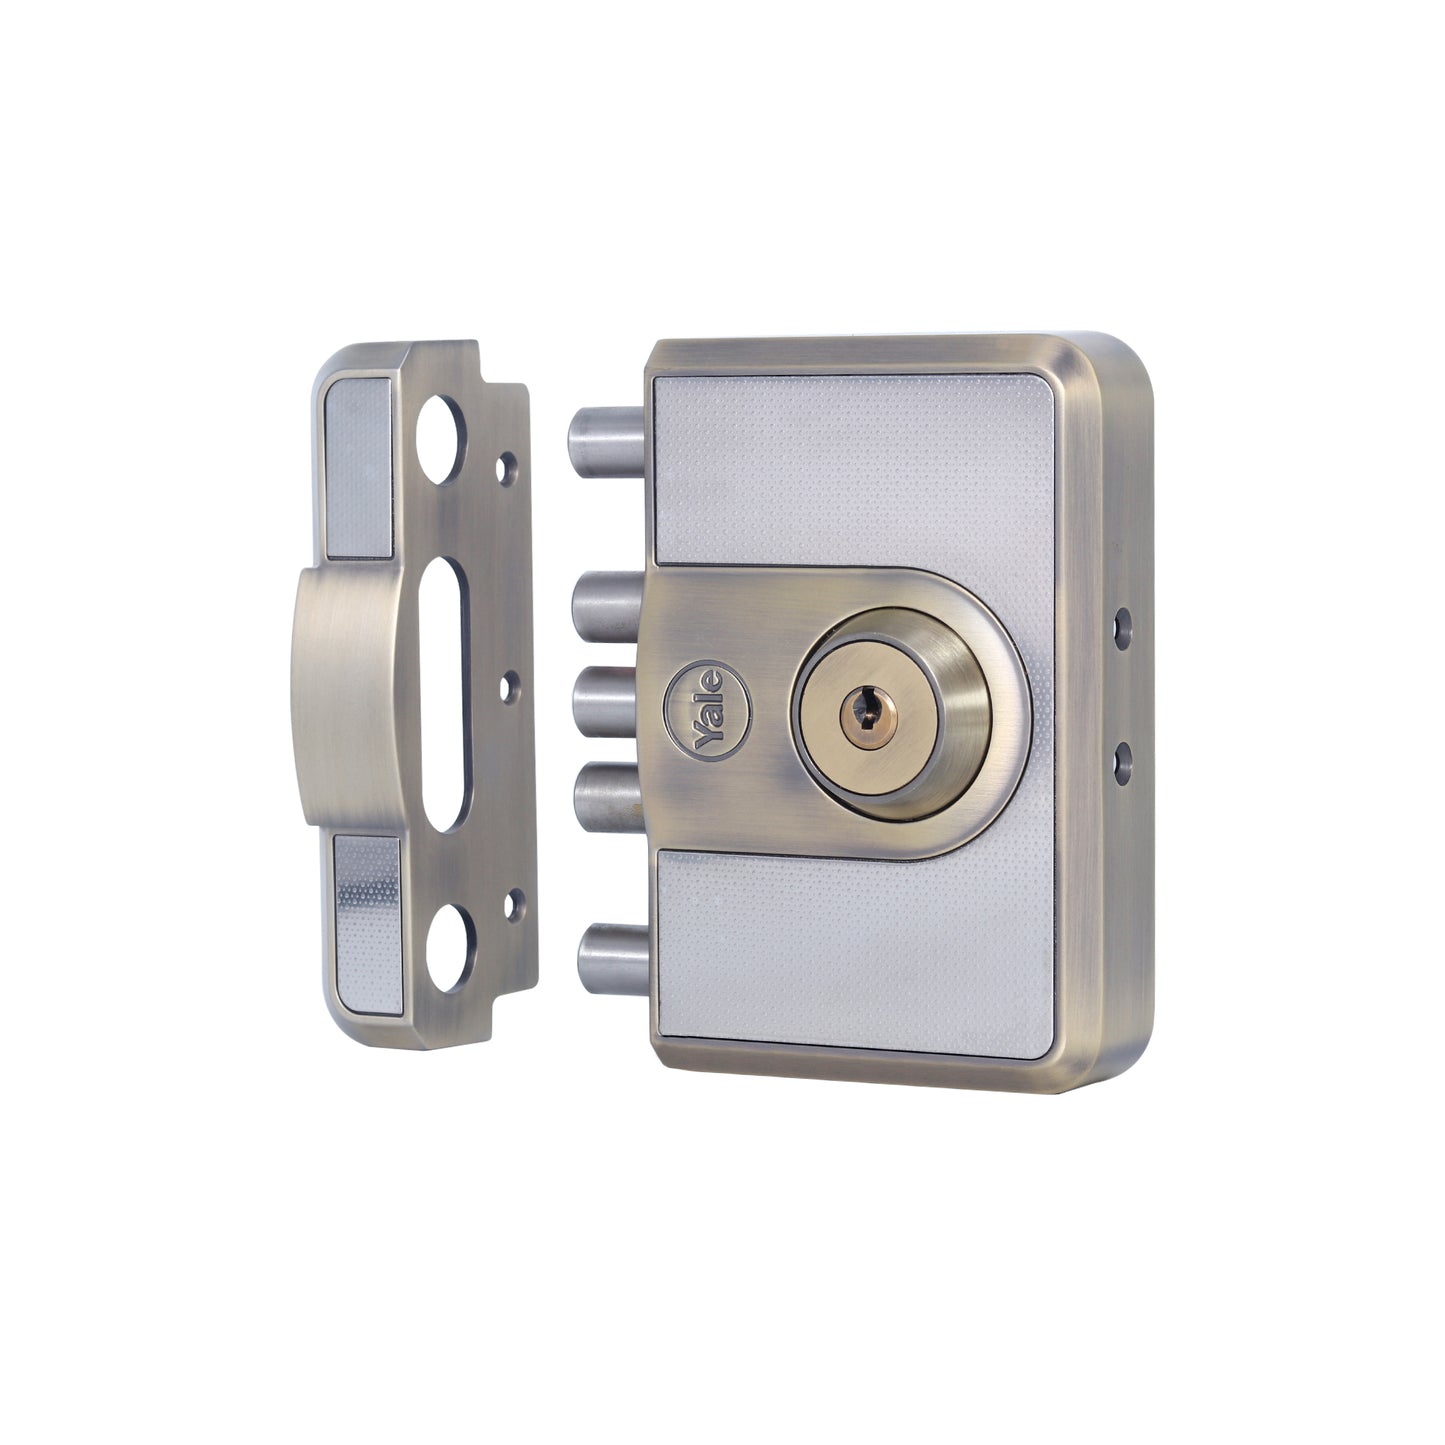 CBD-Cinco 500 Series 5 Dead Bolt Main Door RIM Lock, Both Side Keys, Antique Brass, with Dimple keys